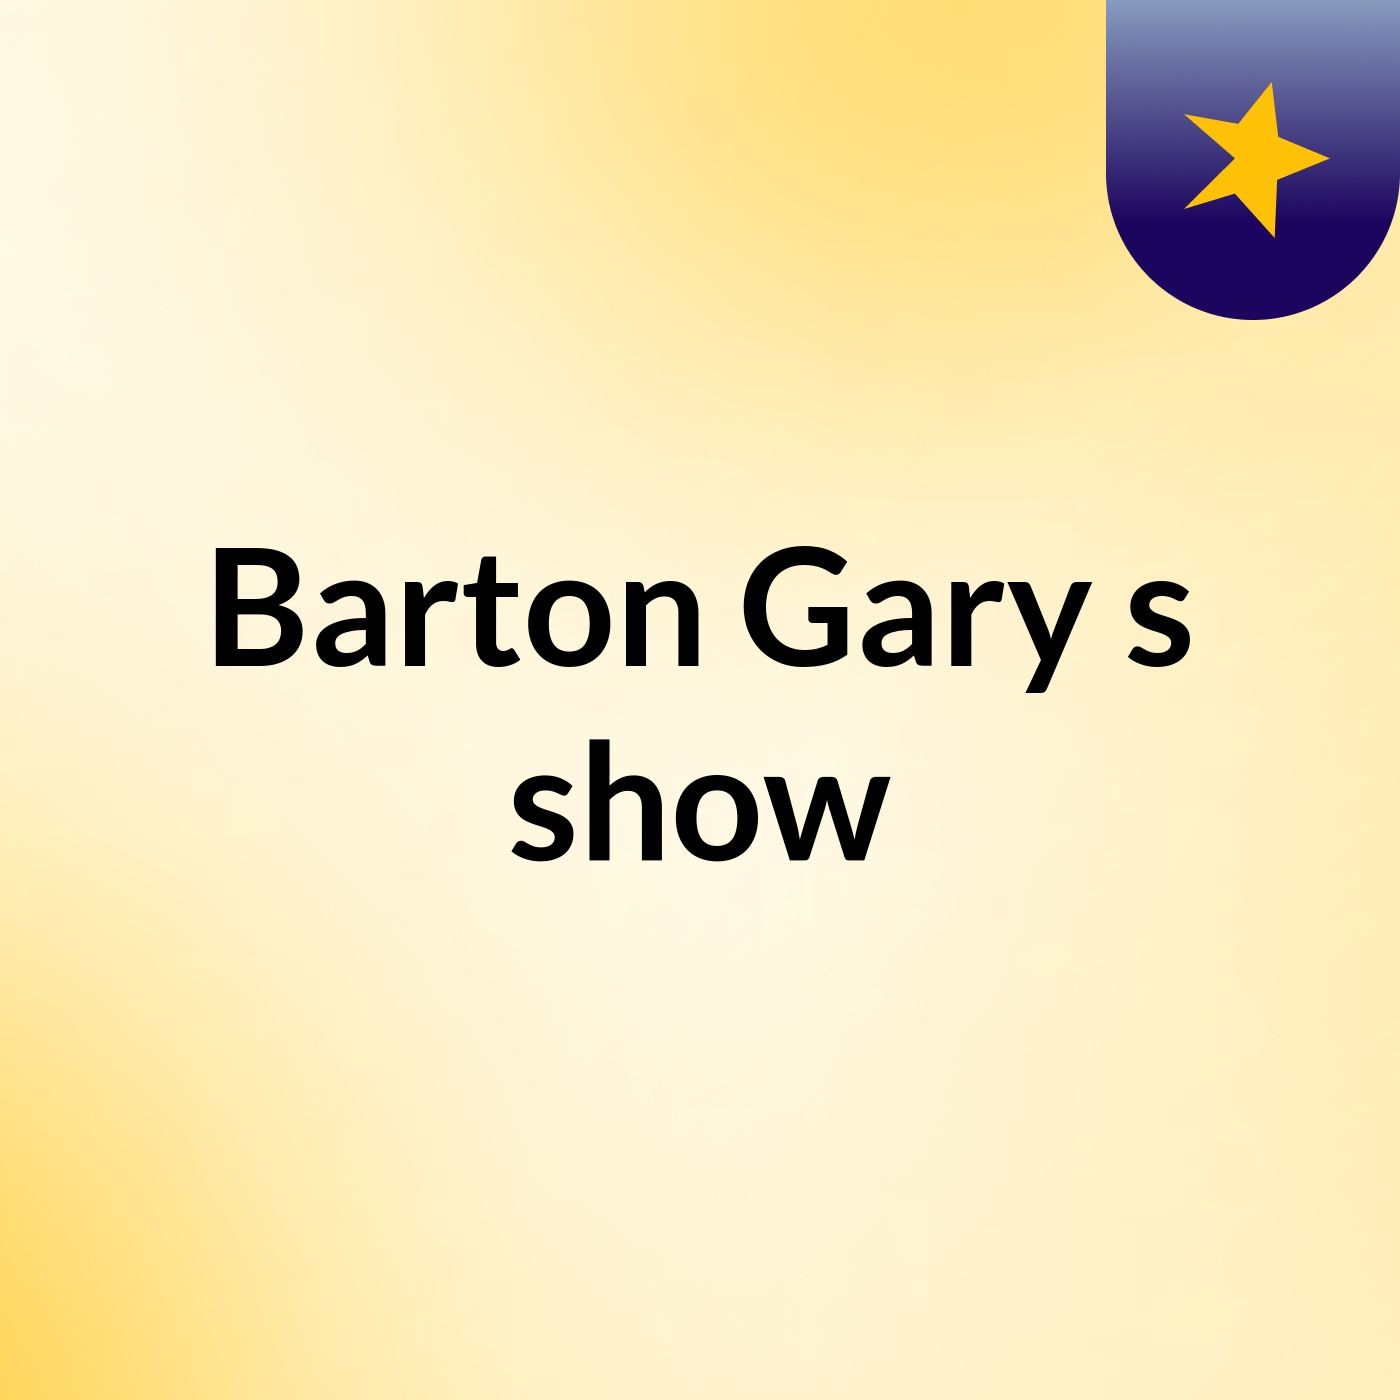 Barton Gary's show